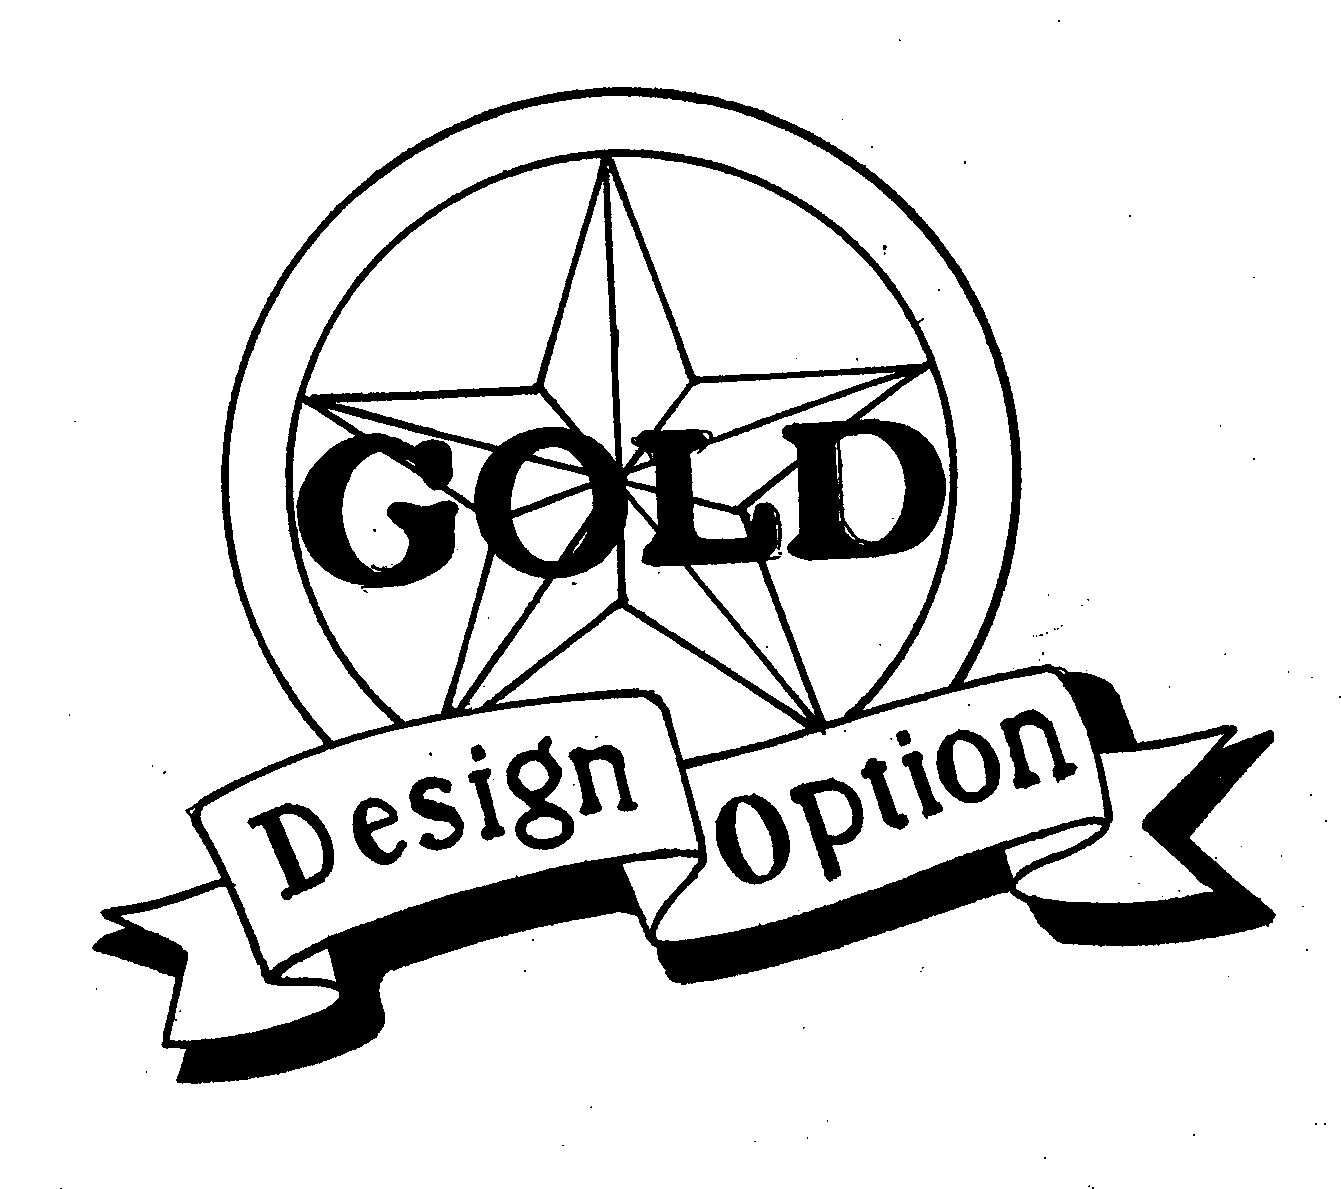  GOLD DESIGN OPTION